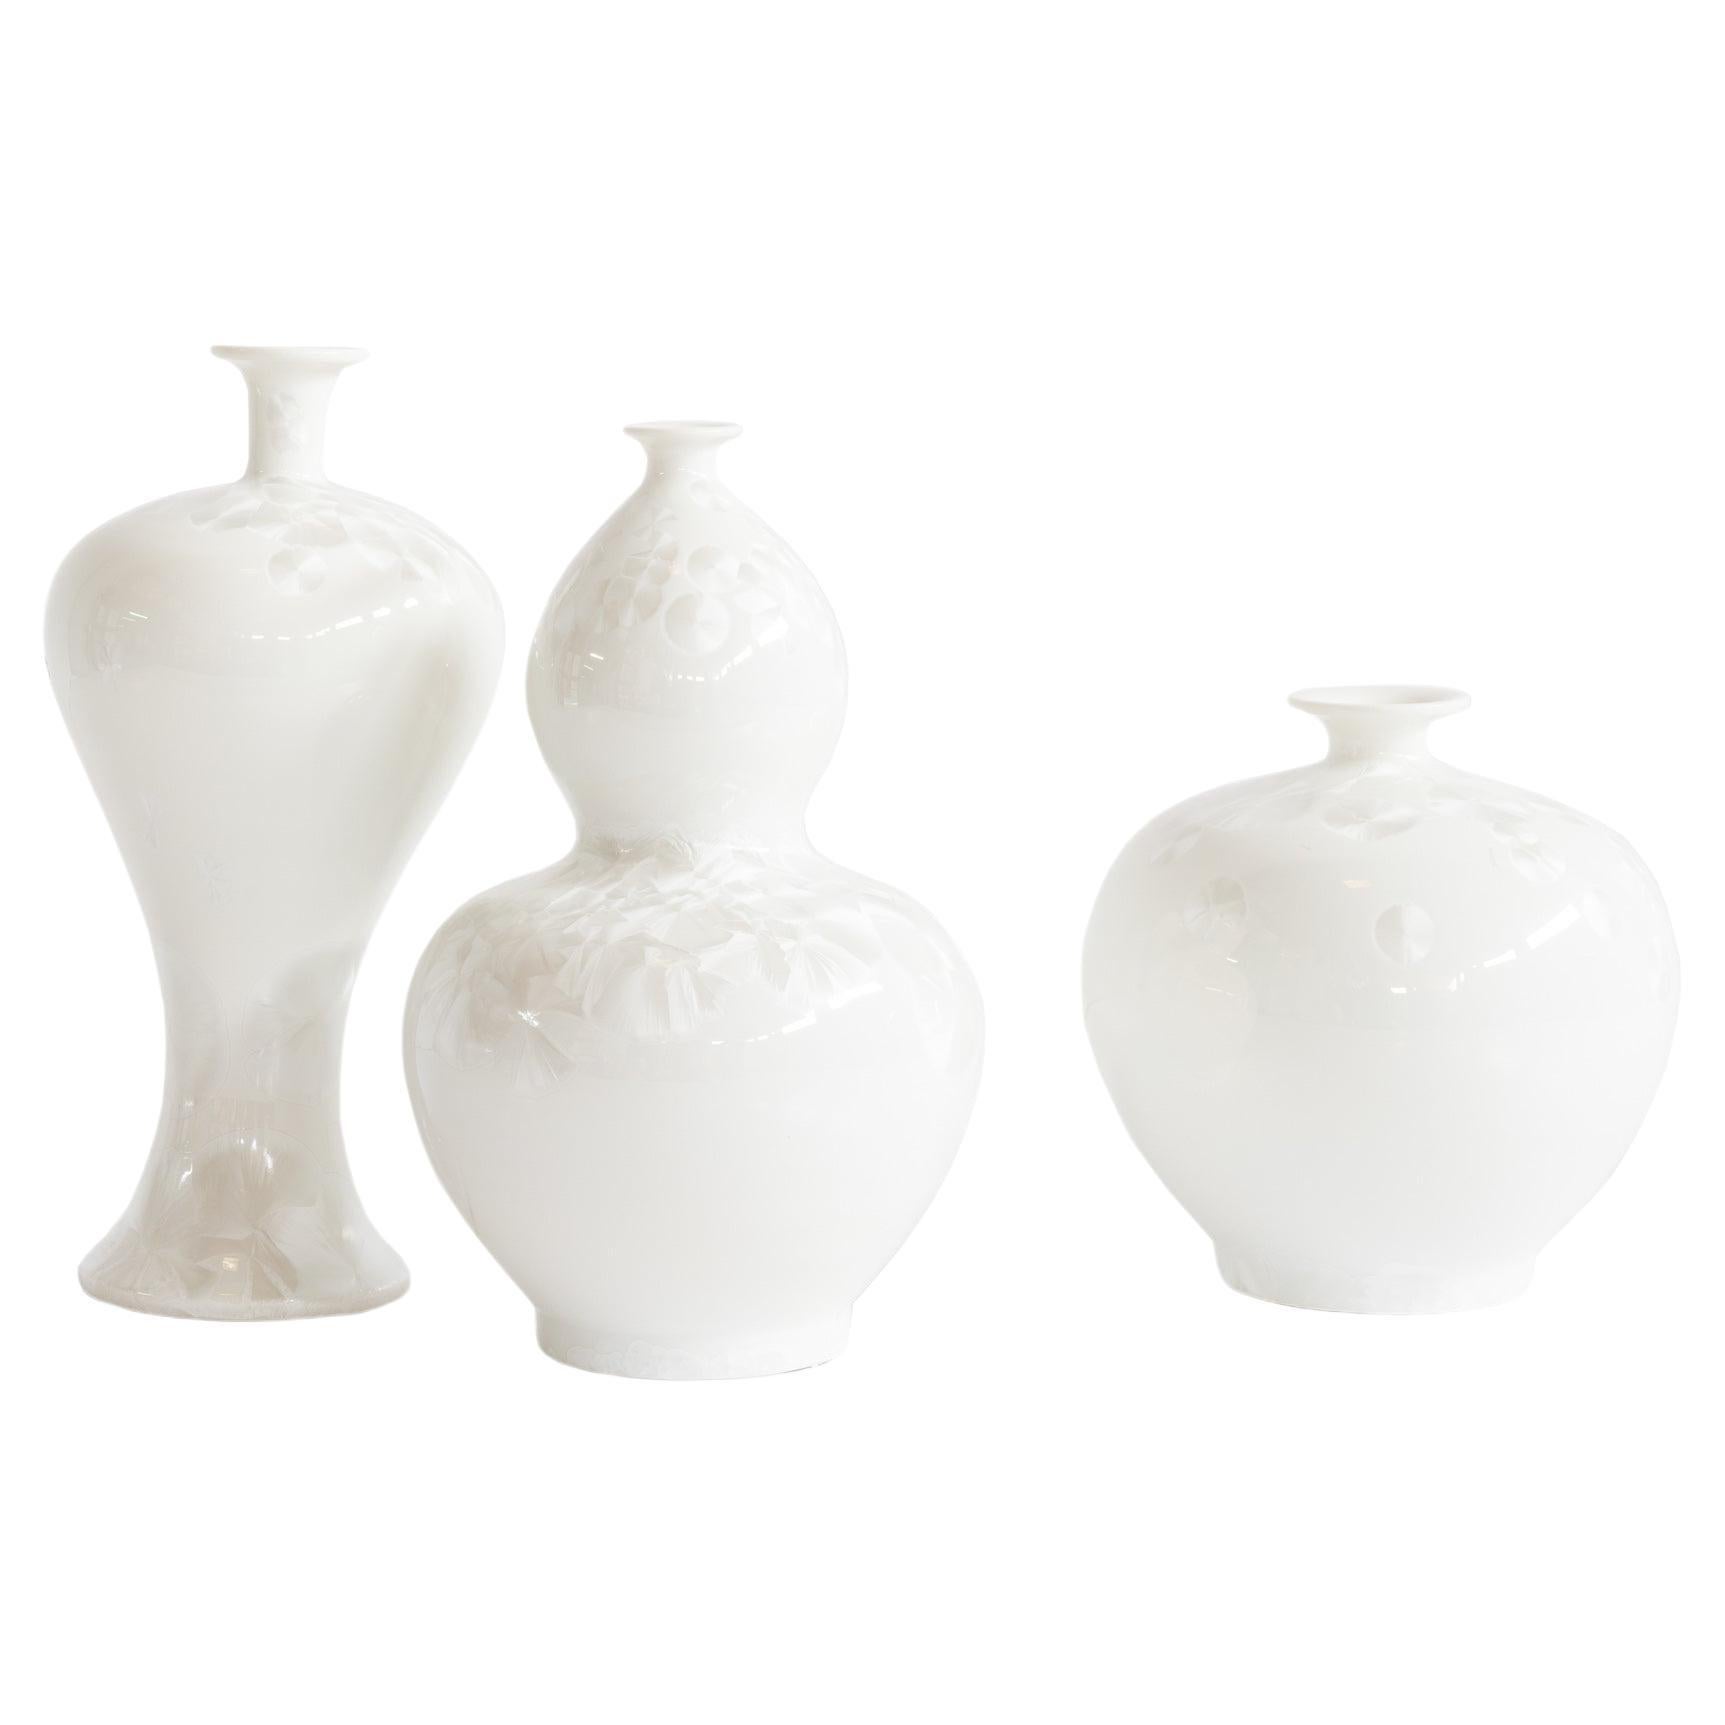 Set/3 Porcelain Vases, DiaoChan Vases, White, Handmolded & Hand Decorated